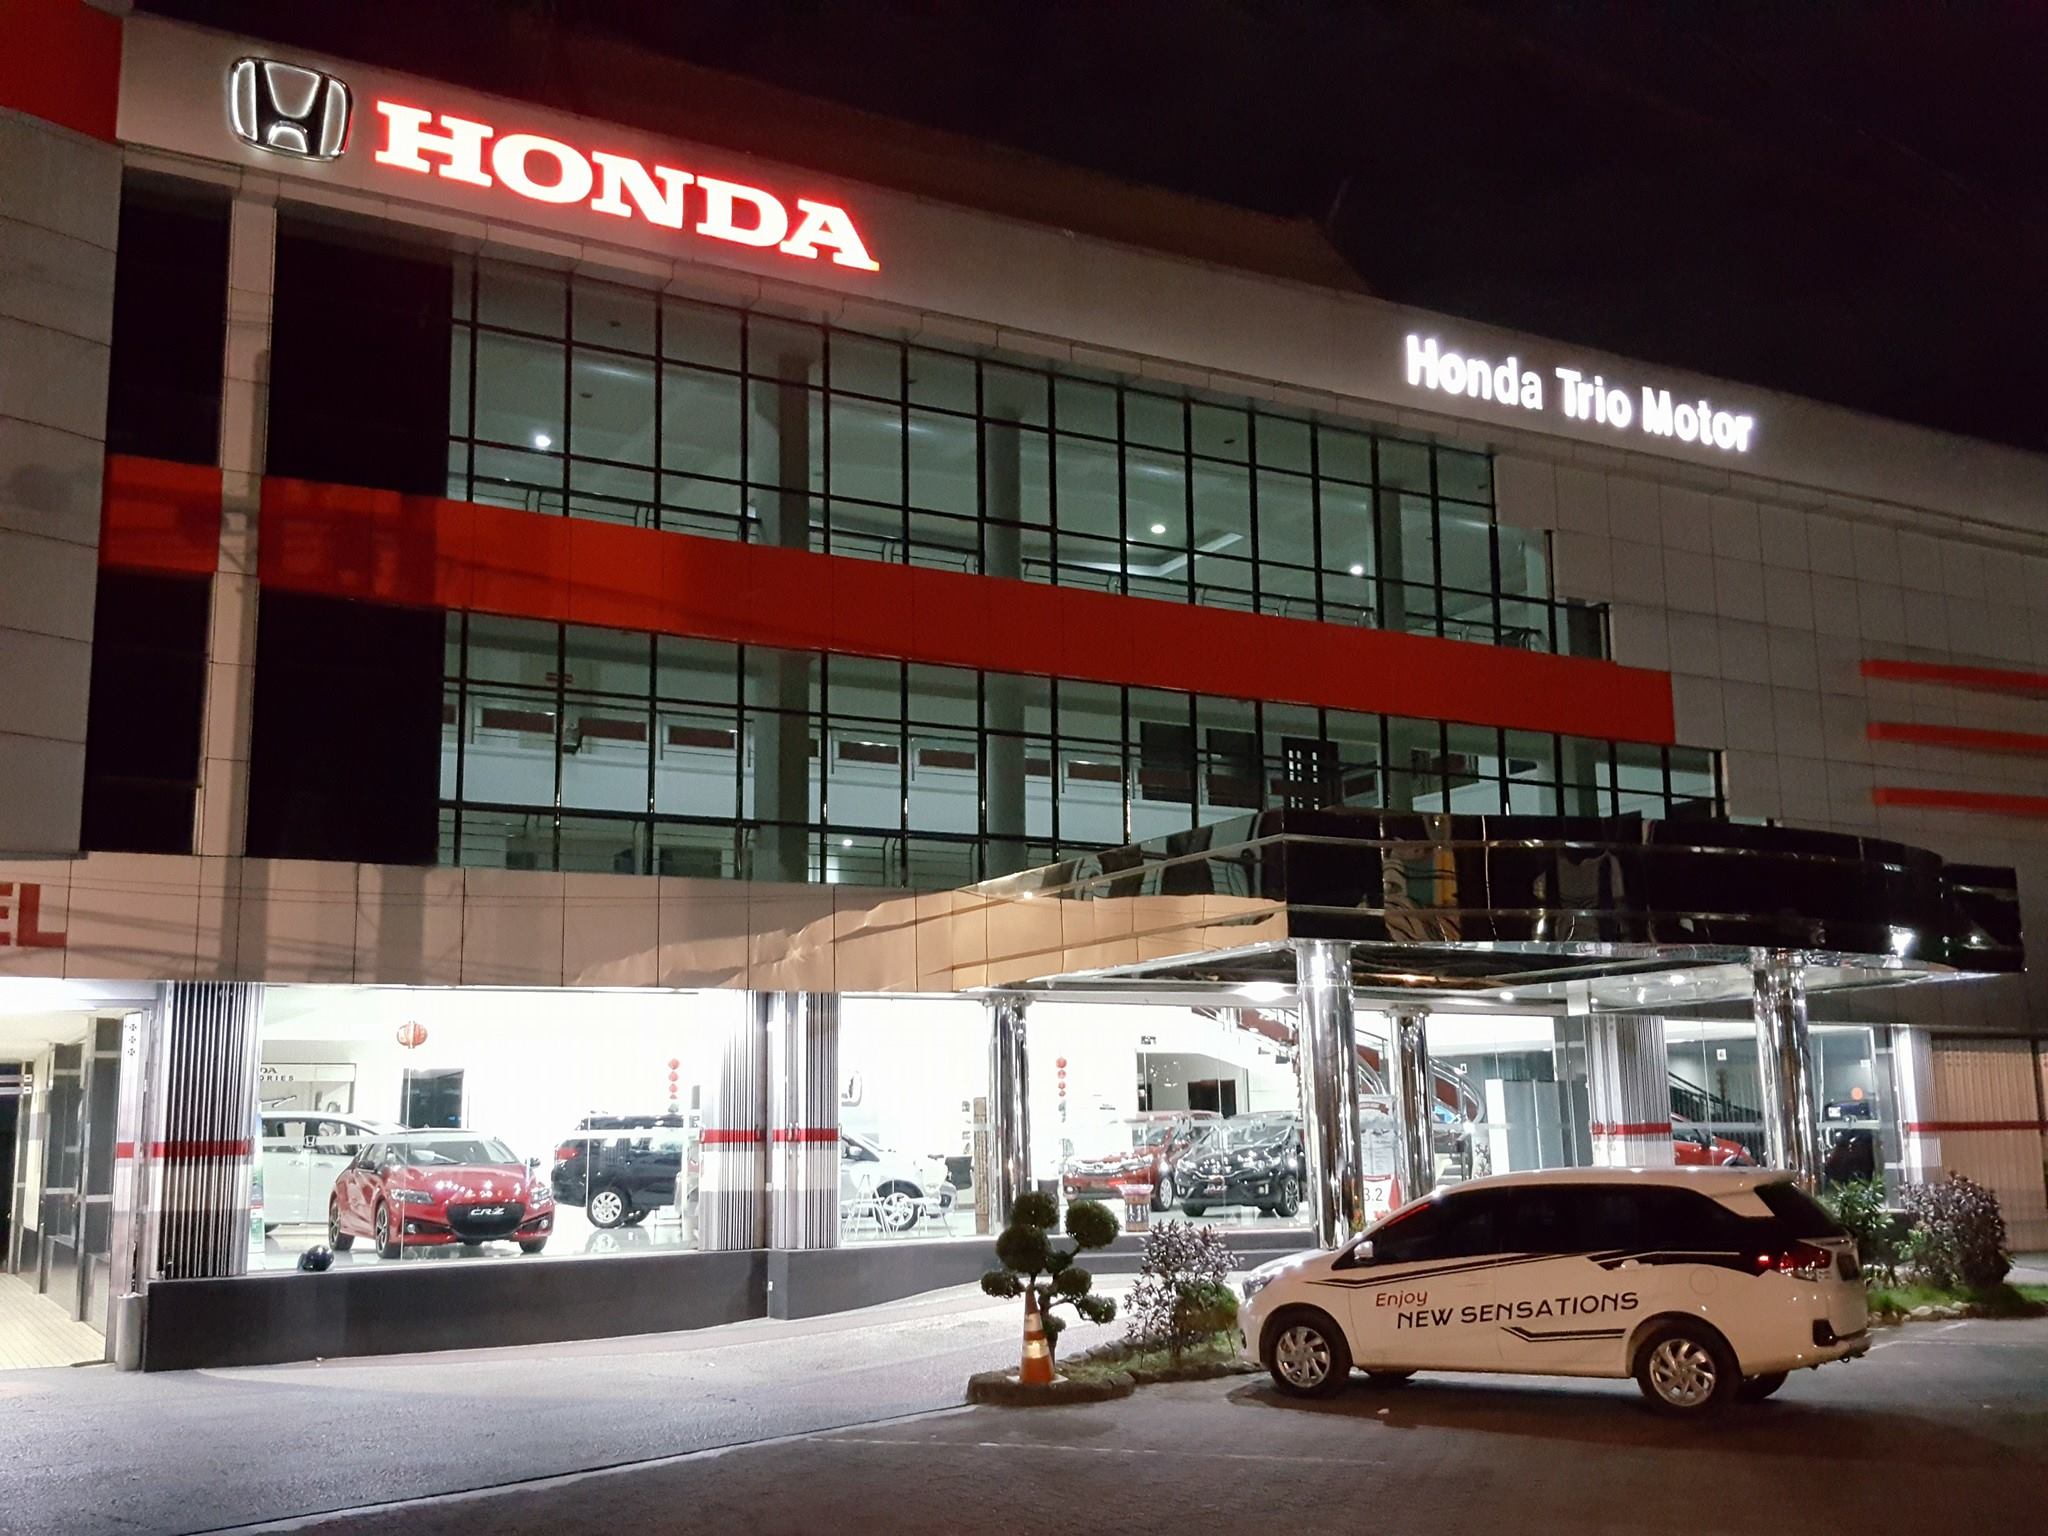  Bengkel  Cat  Mobil  Honda Semarang desain spanduk kreatif